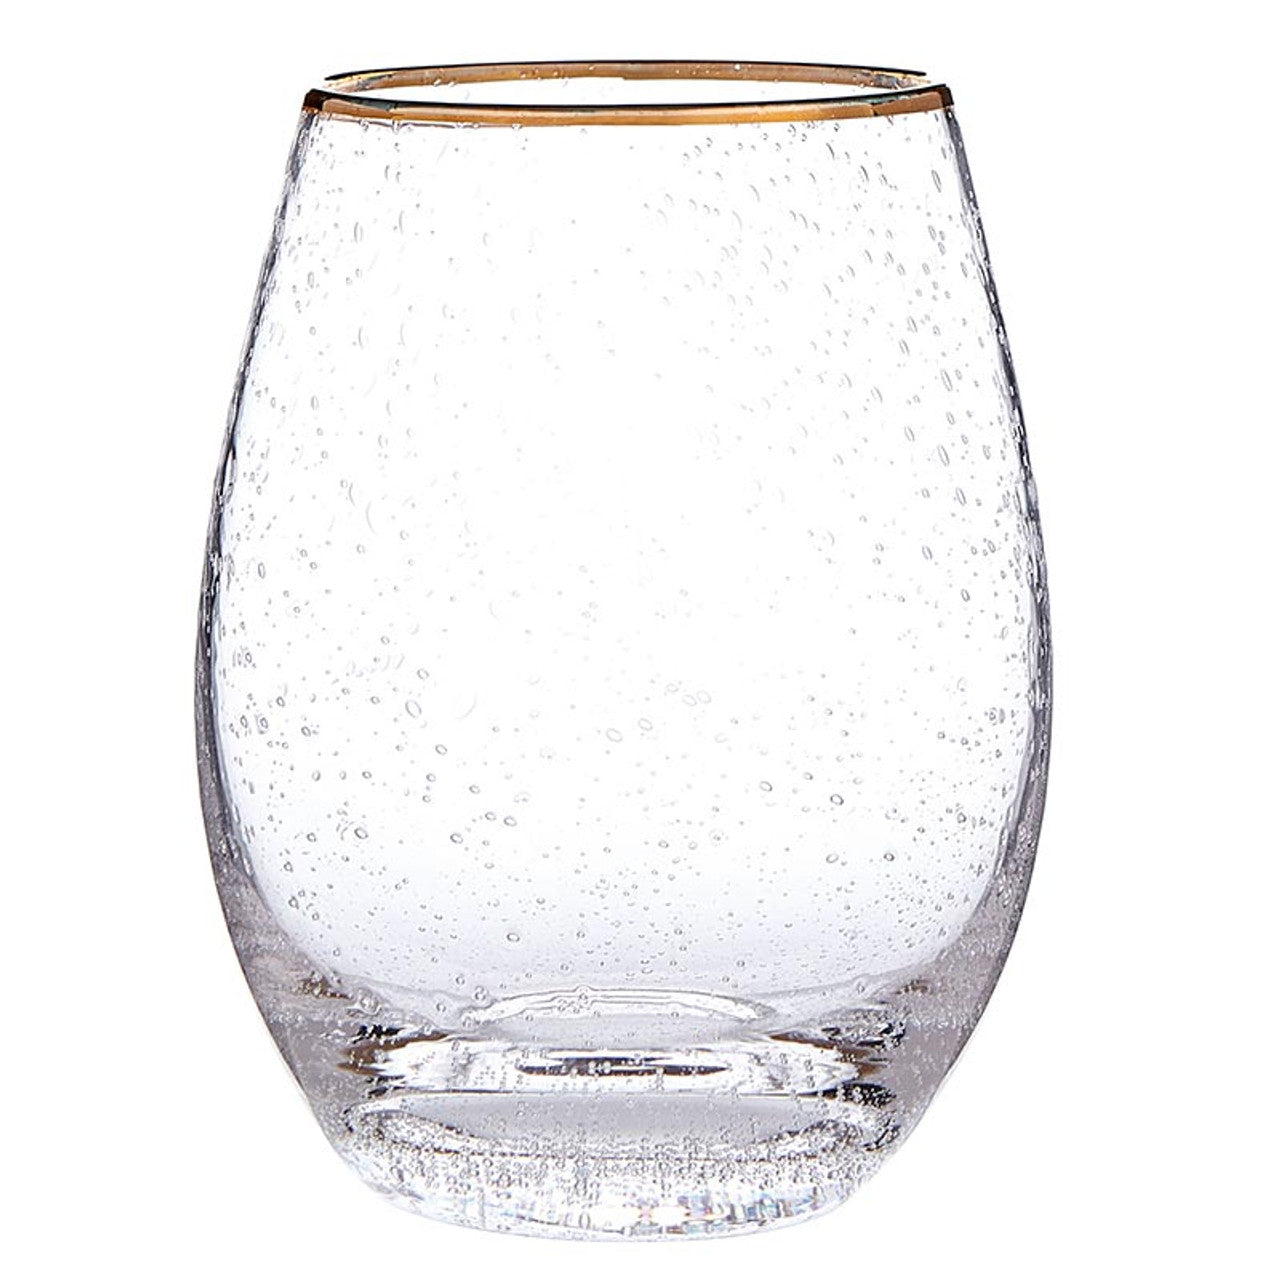 SB Gold-Rimmed Stemless Wine Glasses (Set of 2)